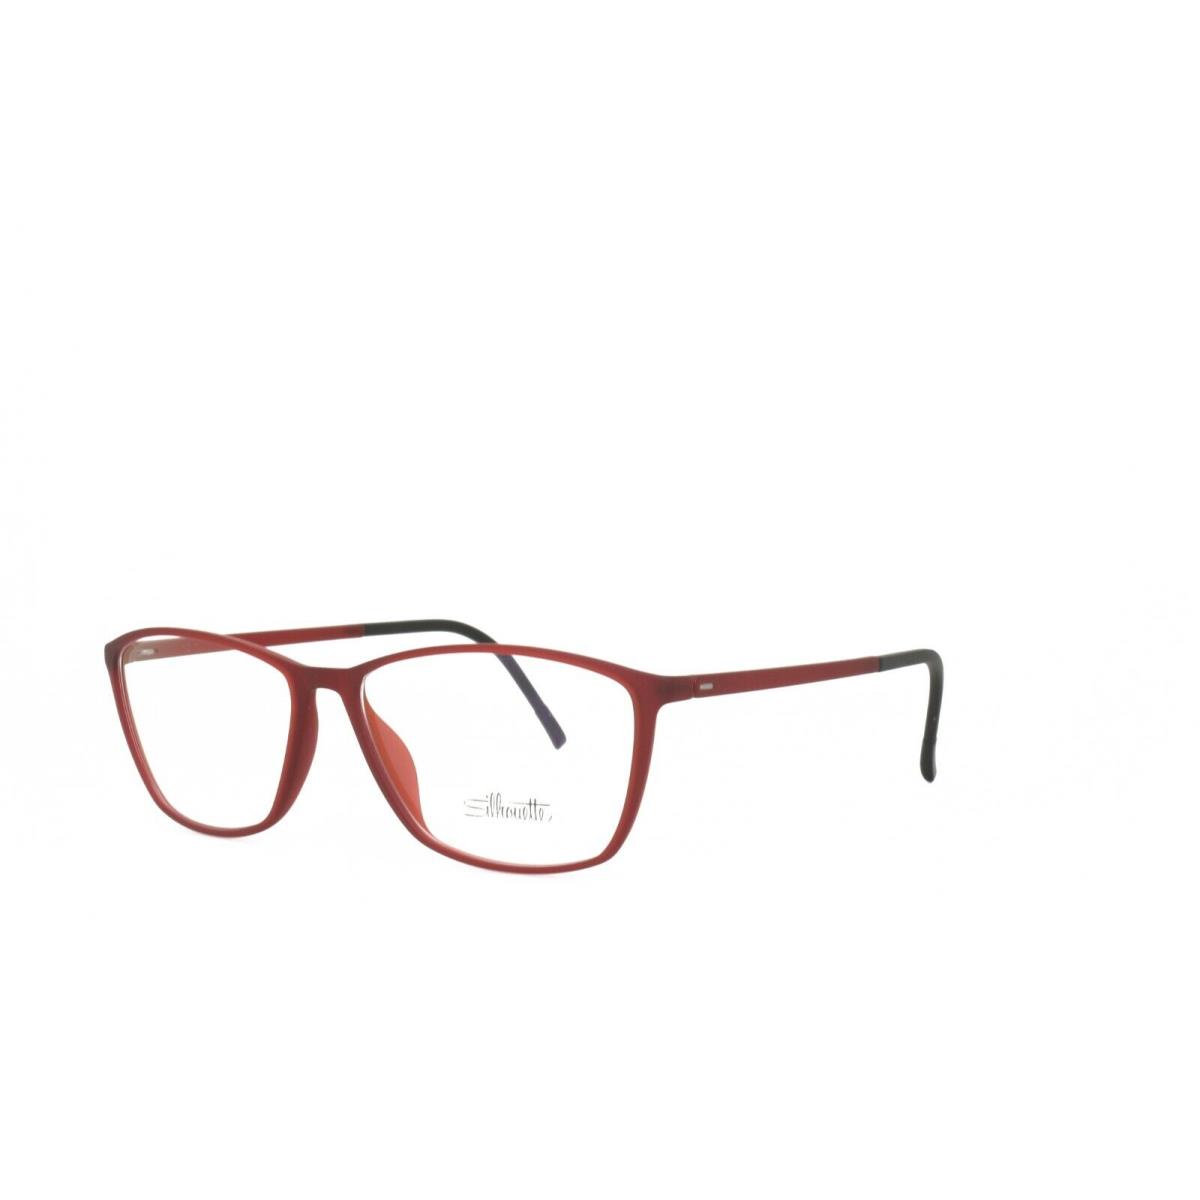 Silhouette Spx Illusion 1560 10 6108 Eyeglasses Frame 52-14-130 Red